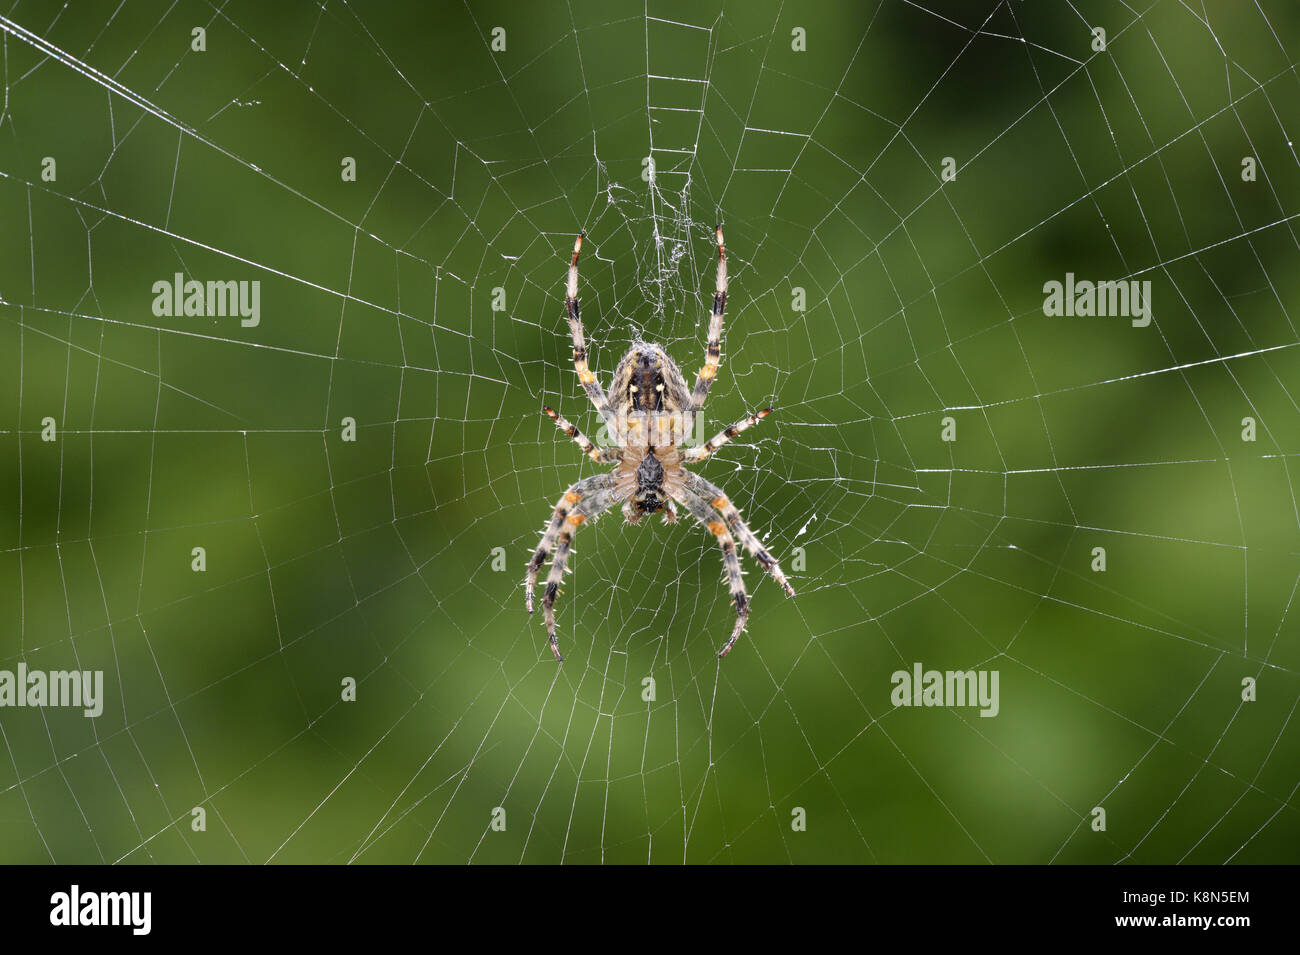 Garden Spider - Araneus diadematus in web Stock Photo